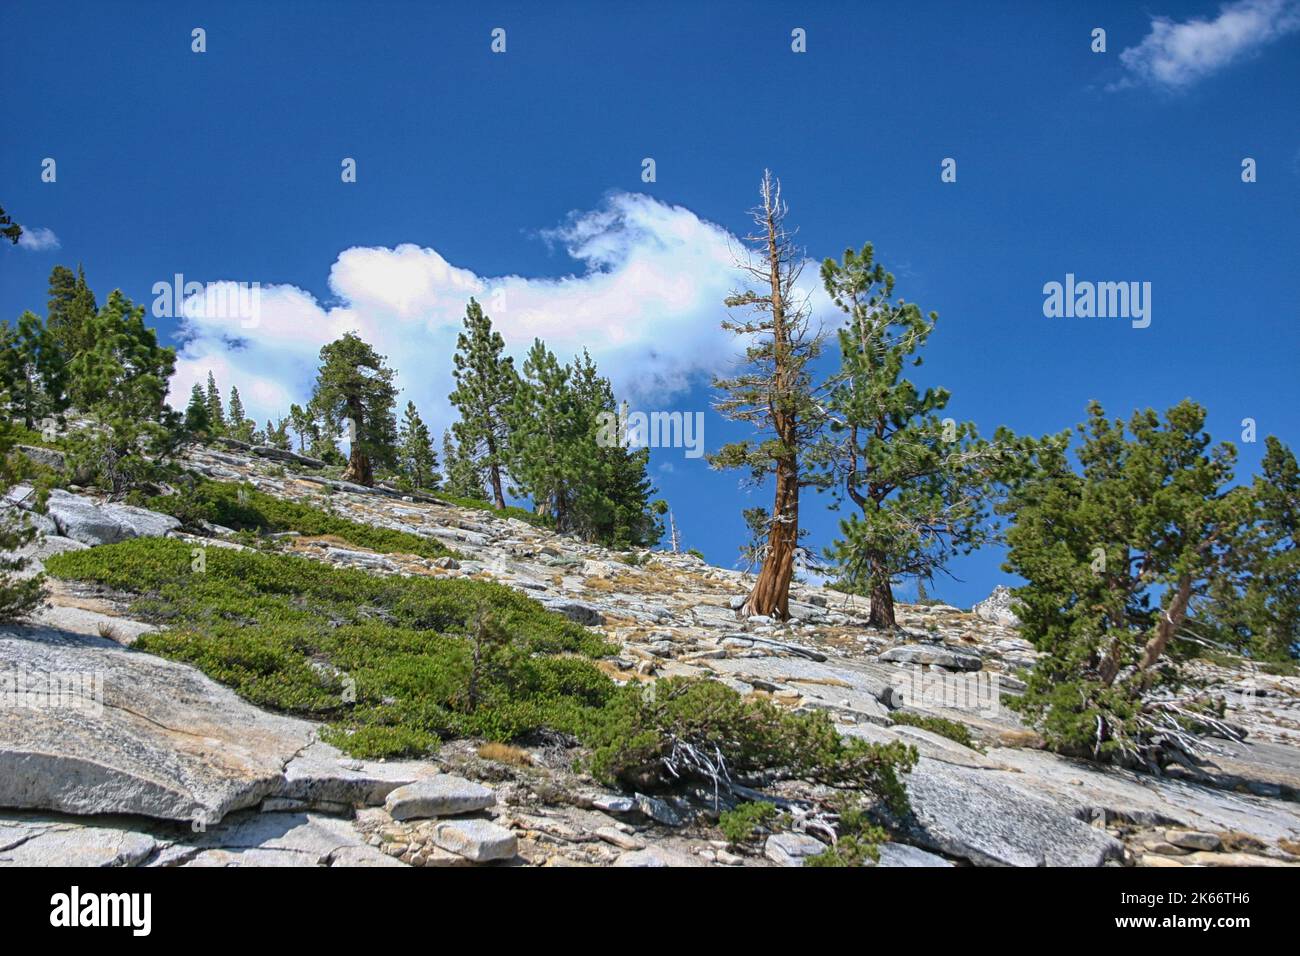 Pine trees near Mountain side road, Yosemite National Park, USA Stock Photo